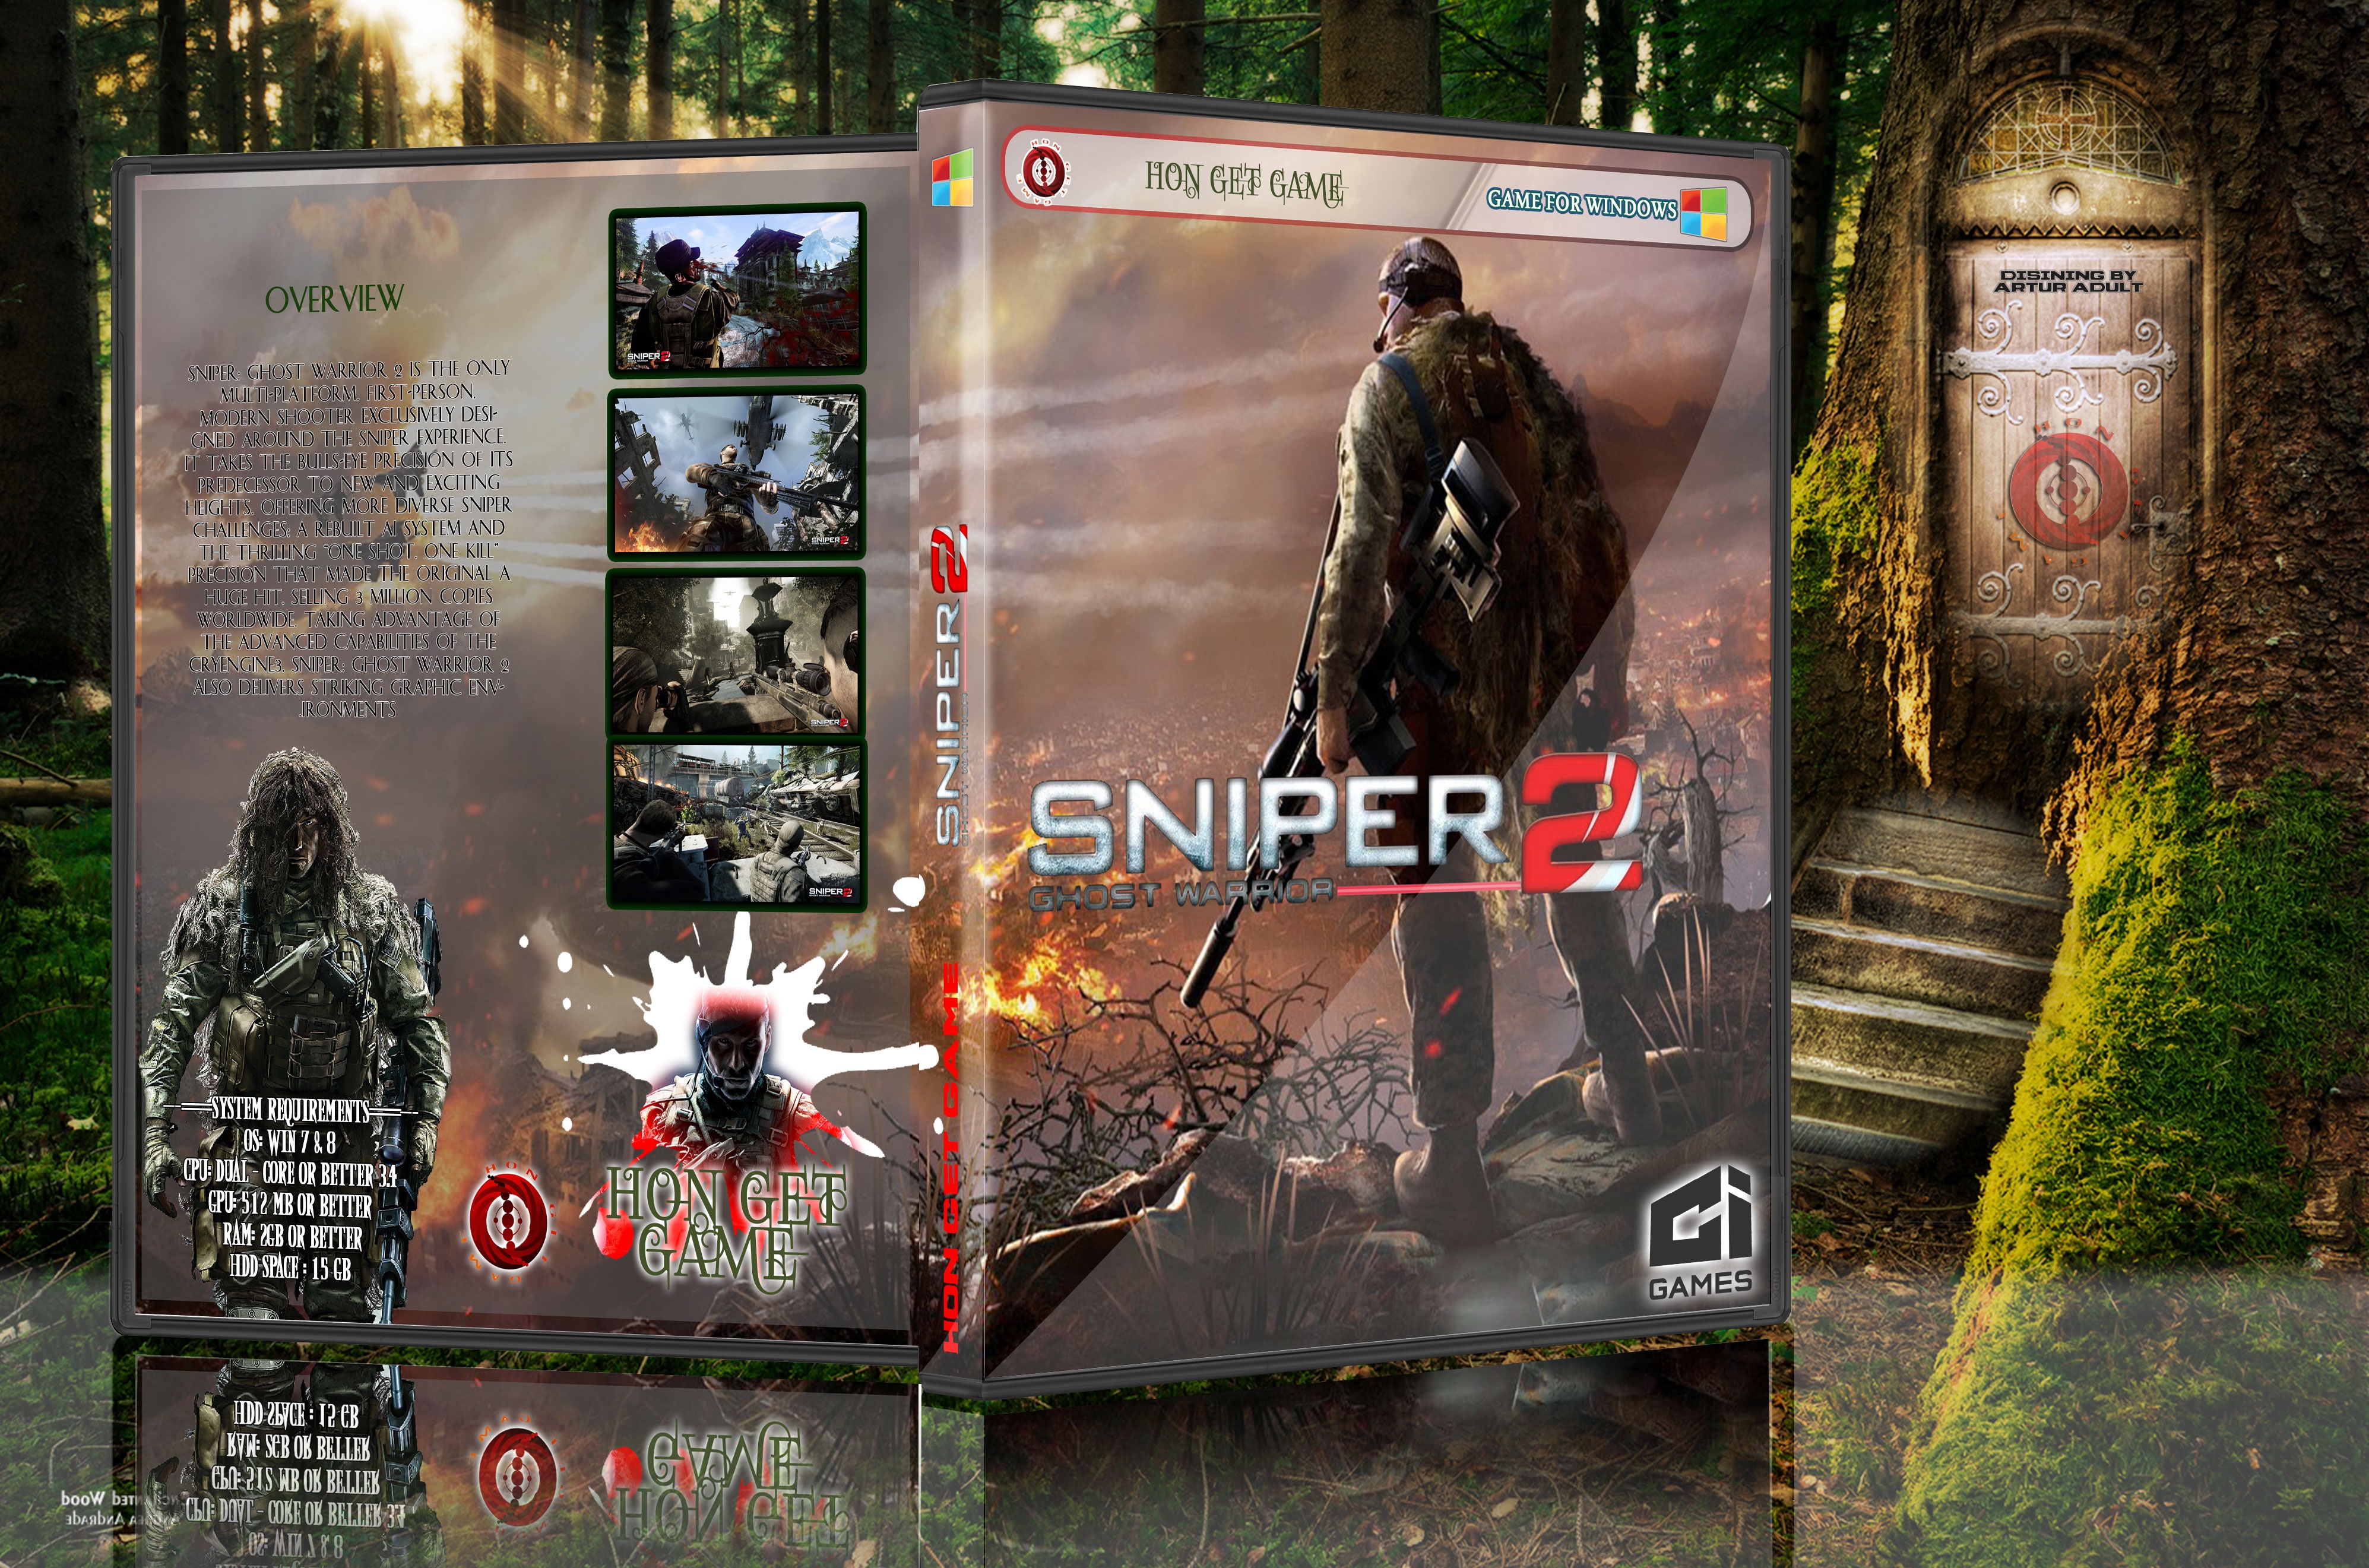 Sniper Ghost Warrior 2 box cover